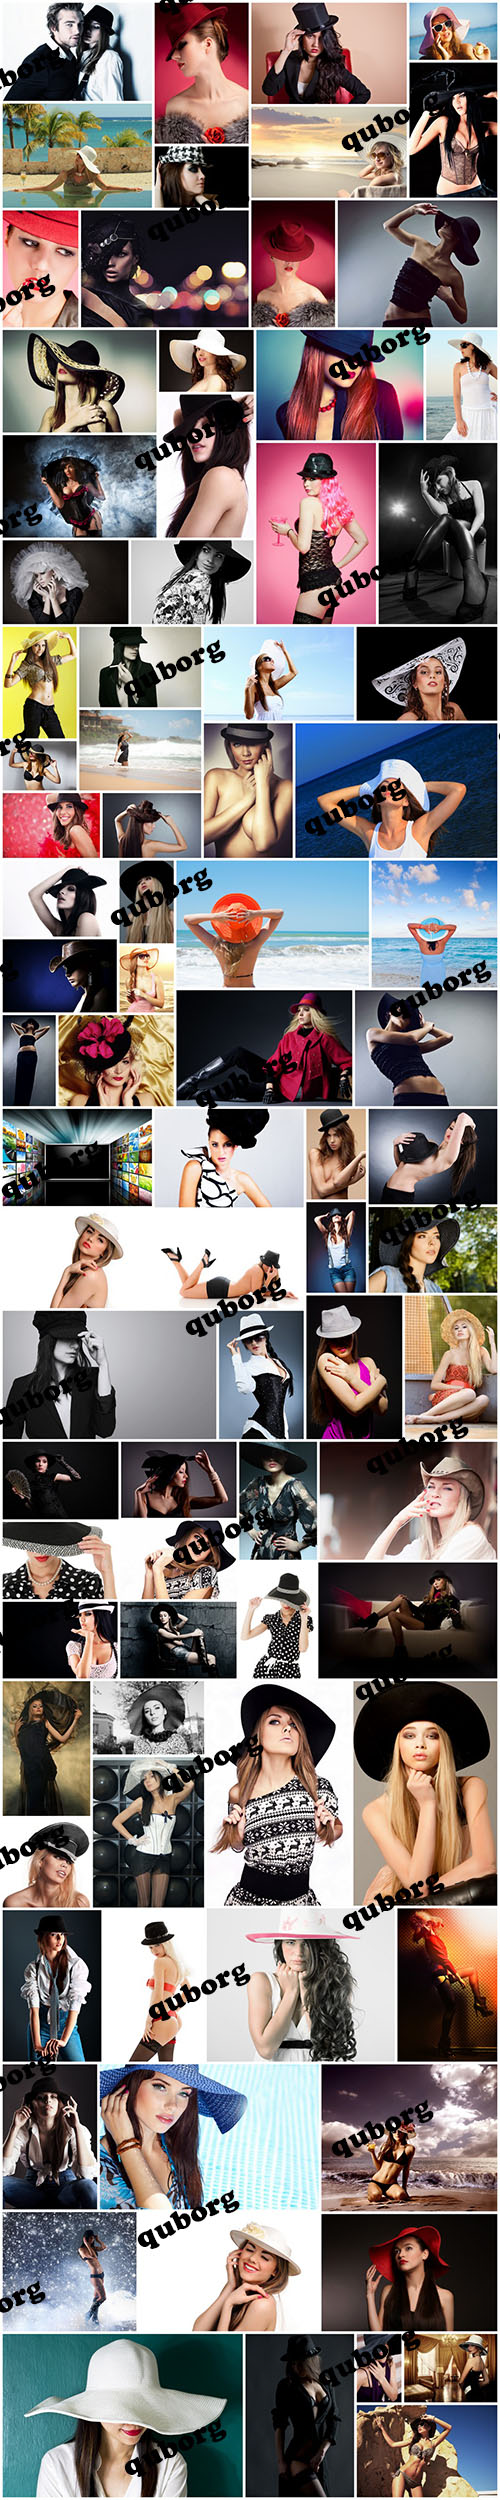 Stock Photos - Beautiful Ladies in Hats